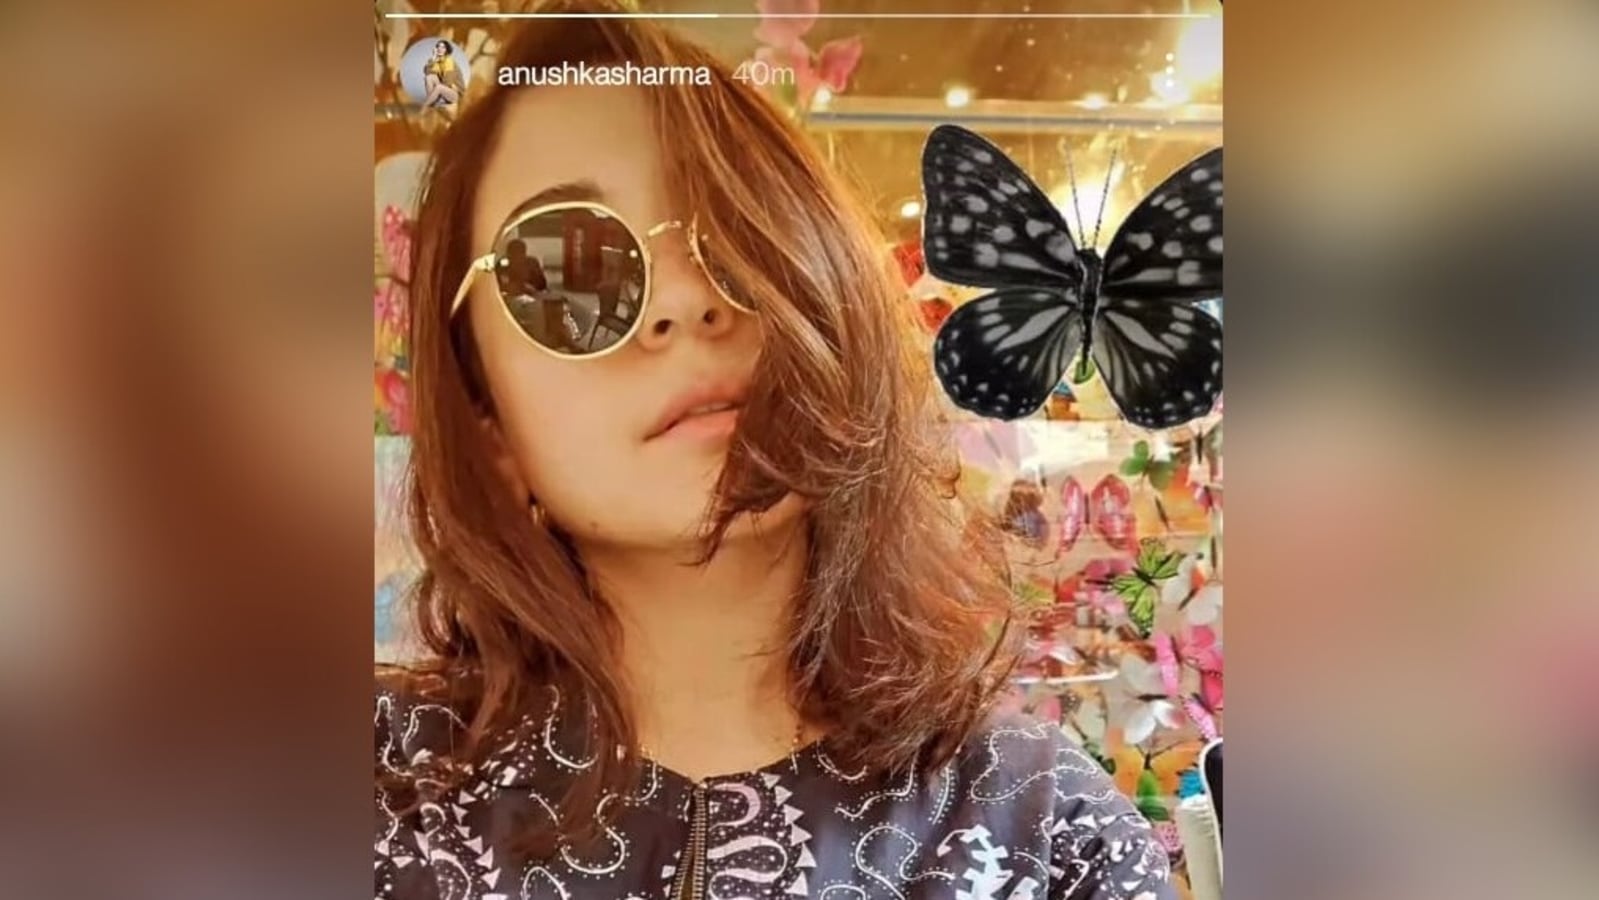 Sunglasses or normal glasses? She looks amazing in both! : r/AnushkaSharma